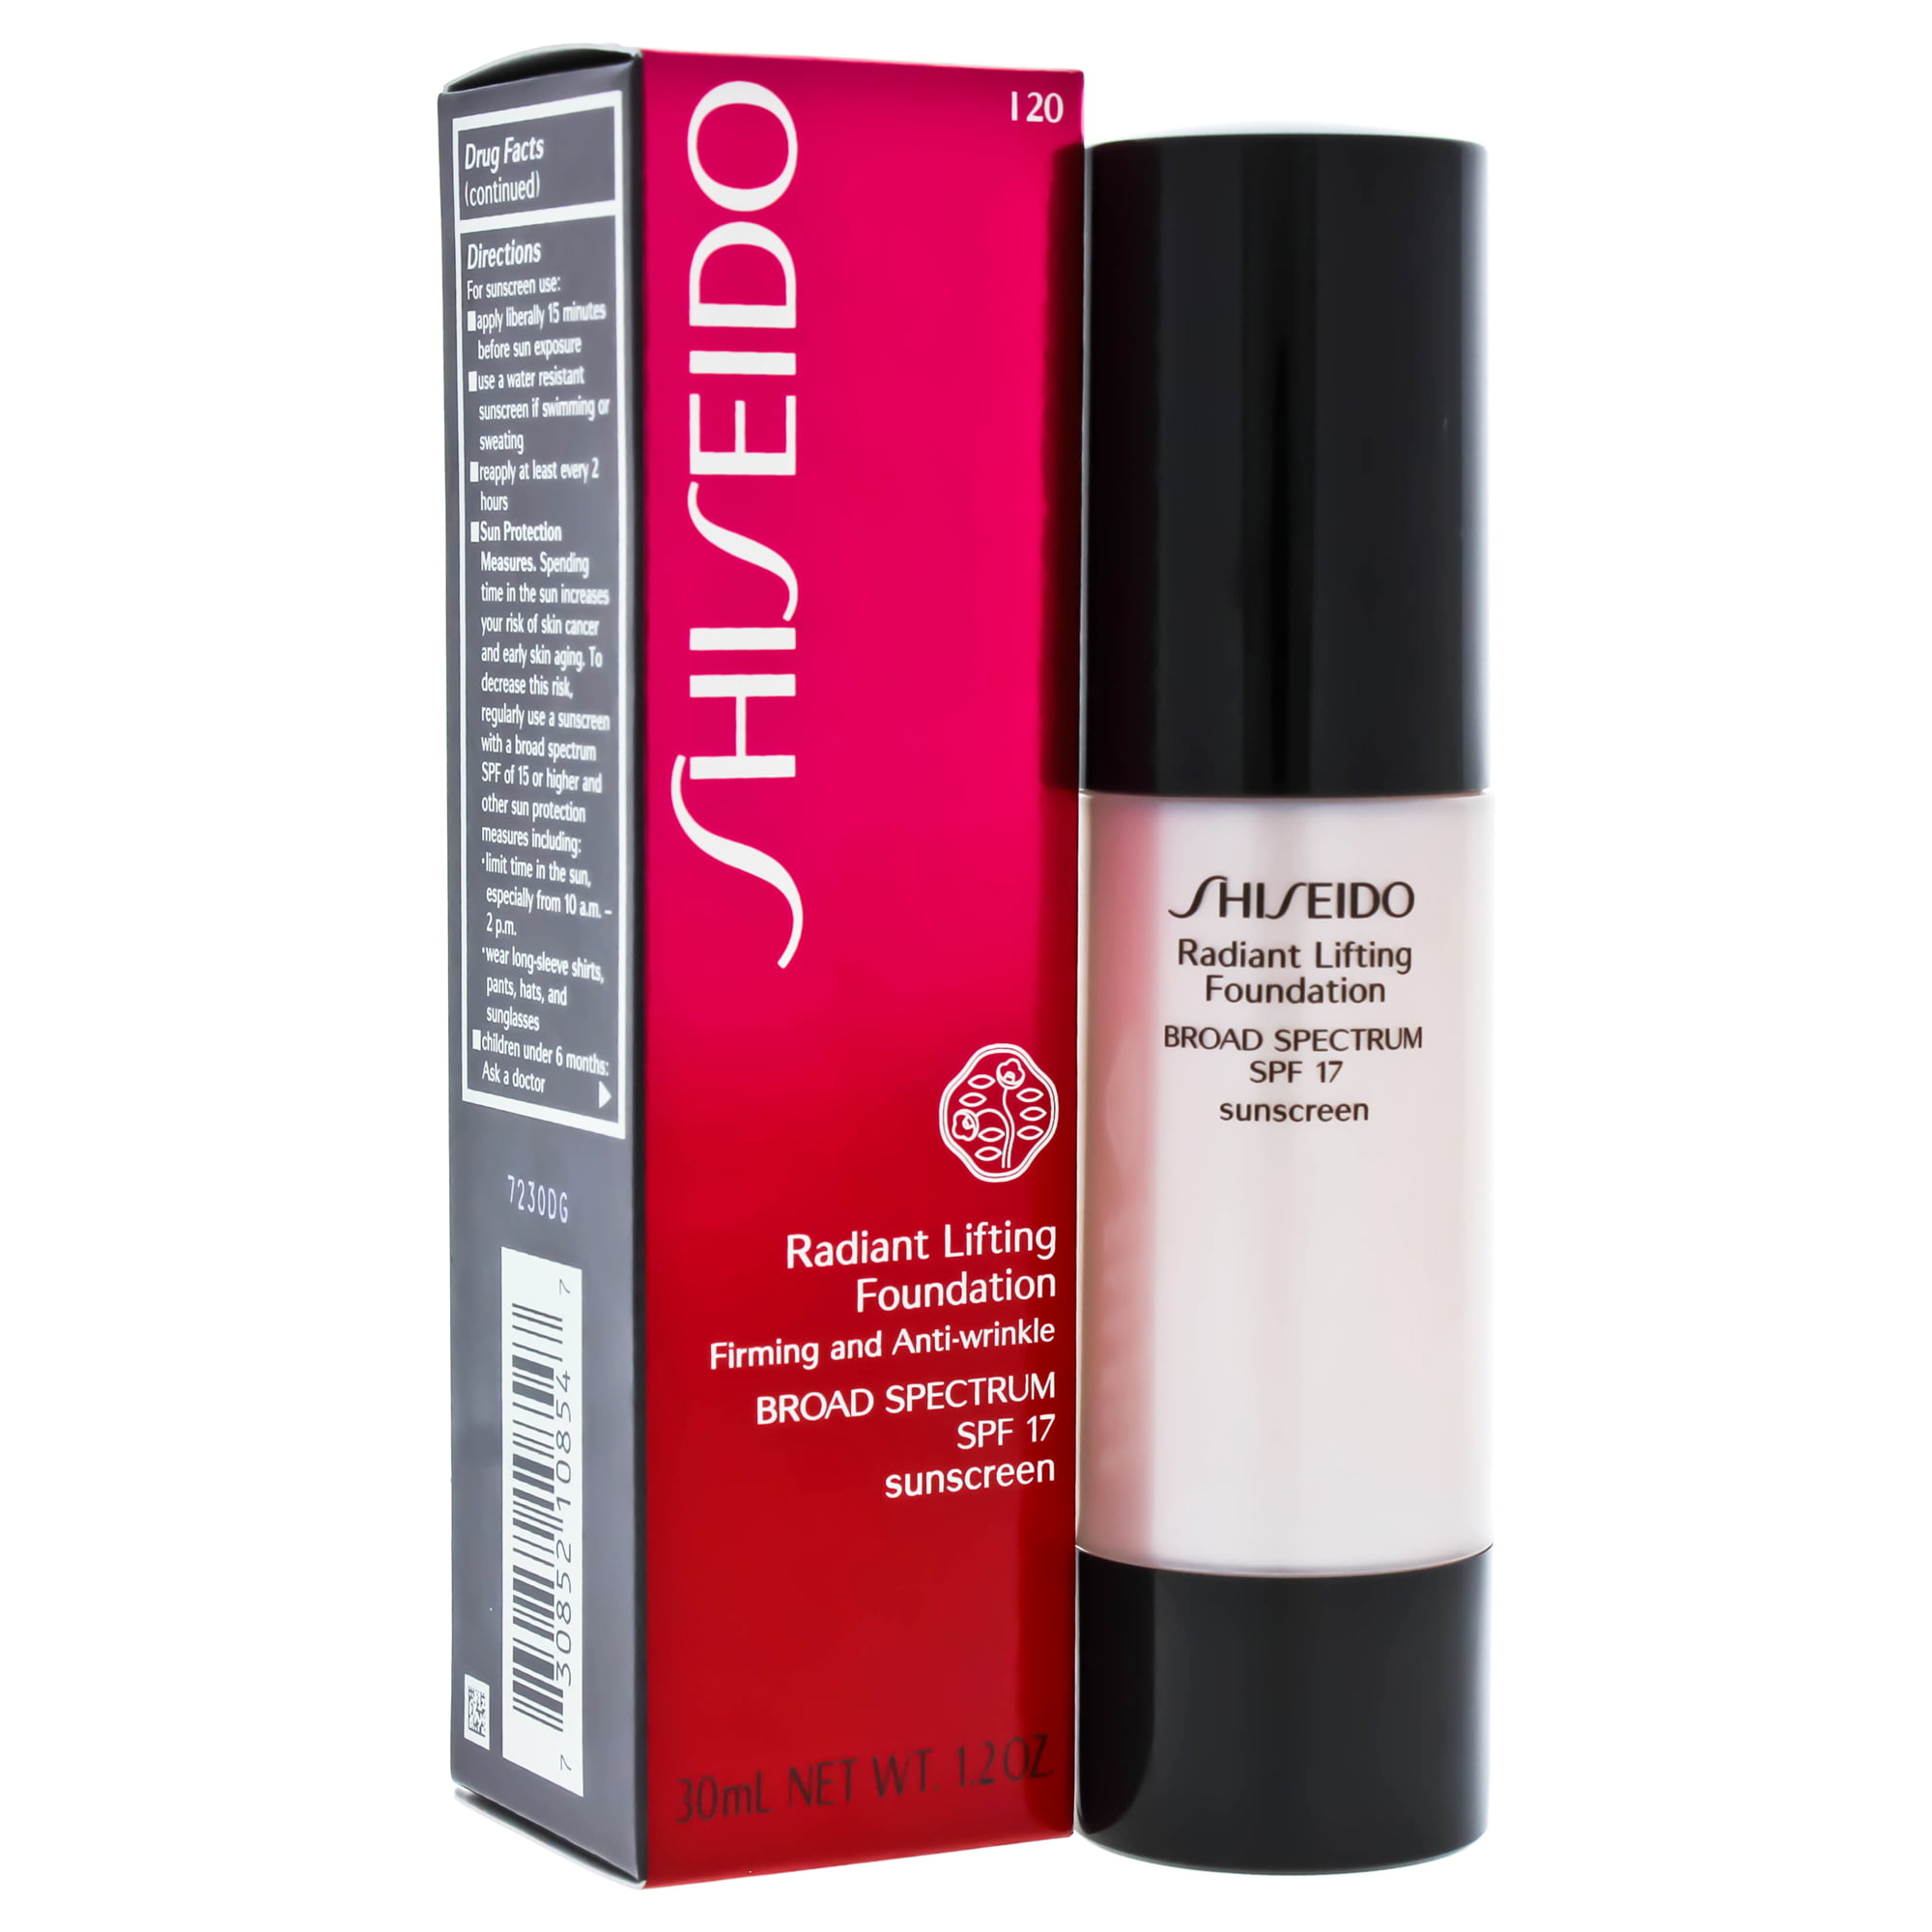 Shiseido radiant lifting